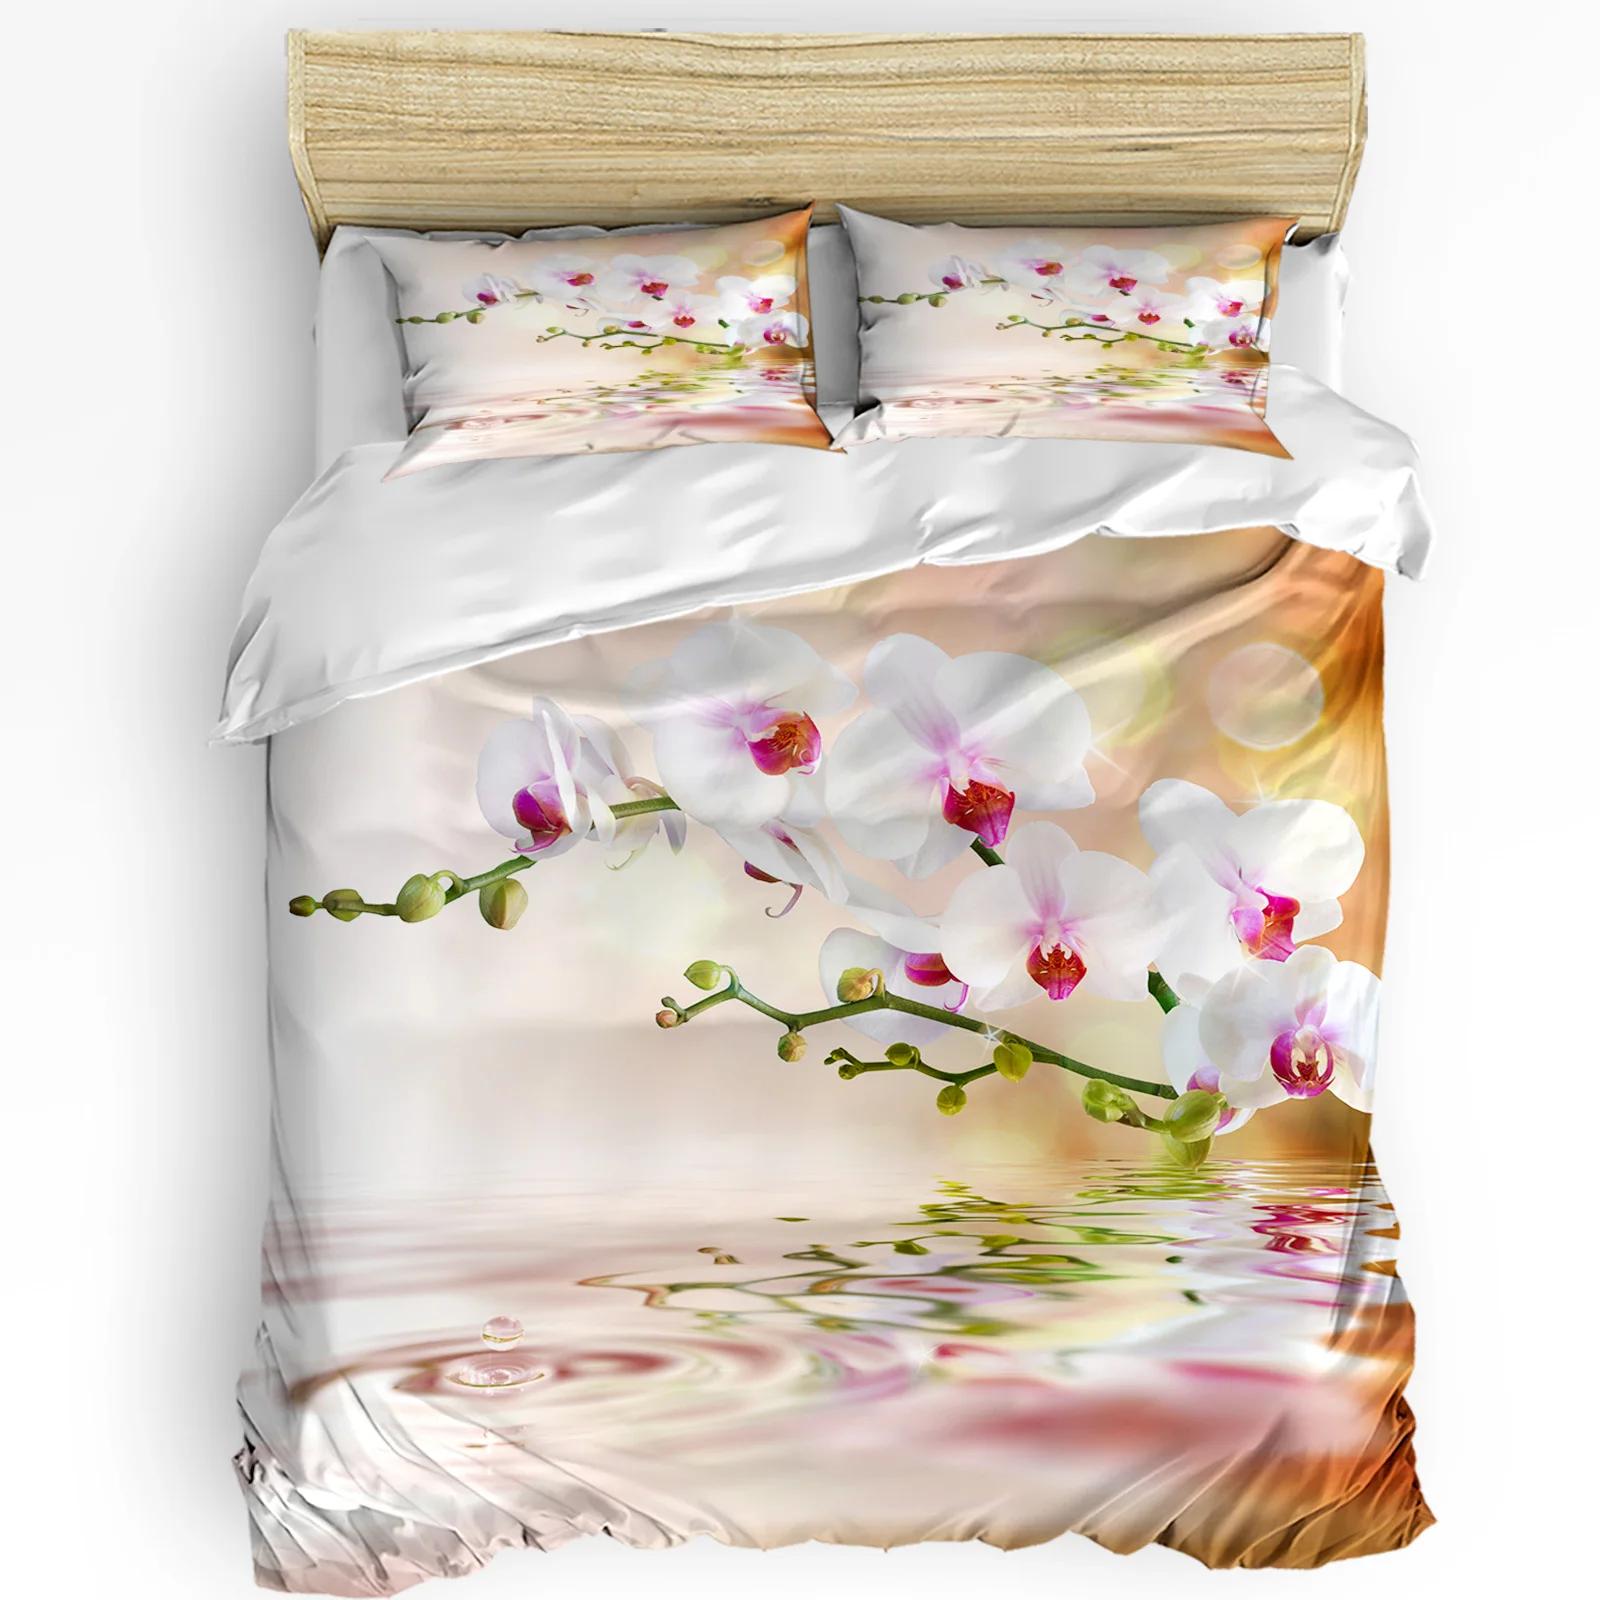 Water Orchid Flower Plant Bedding Set 3pcs Boys Girls Duvet Cover Pillowcase Kids Adult Quilt Cover Double Bed Set H